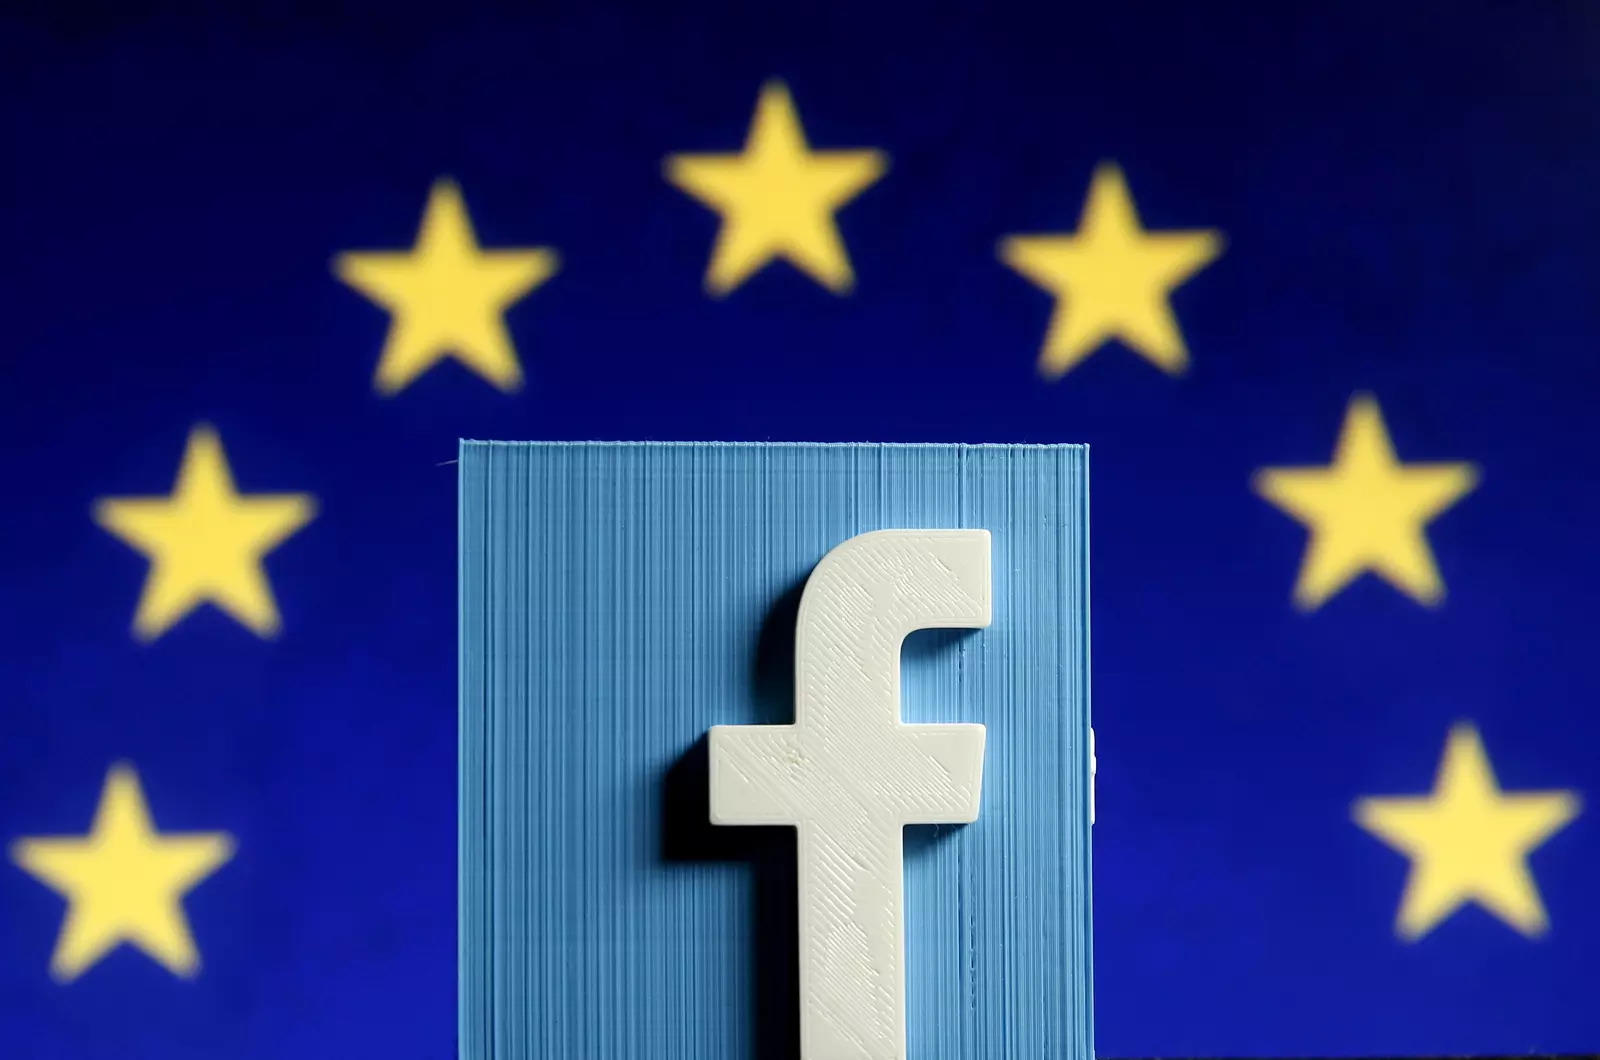 Facebook logo in front of the EU flag